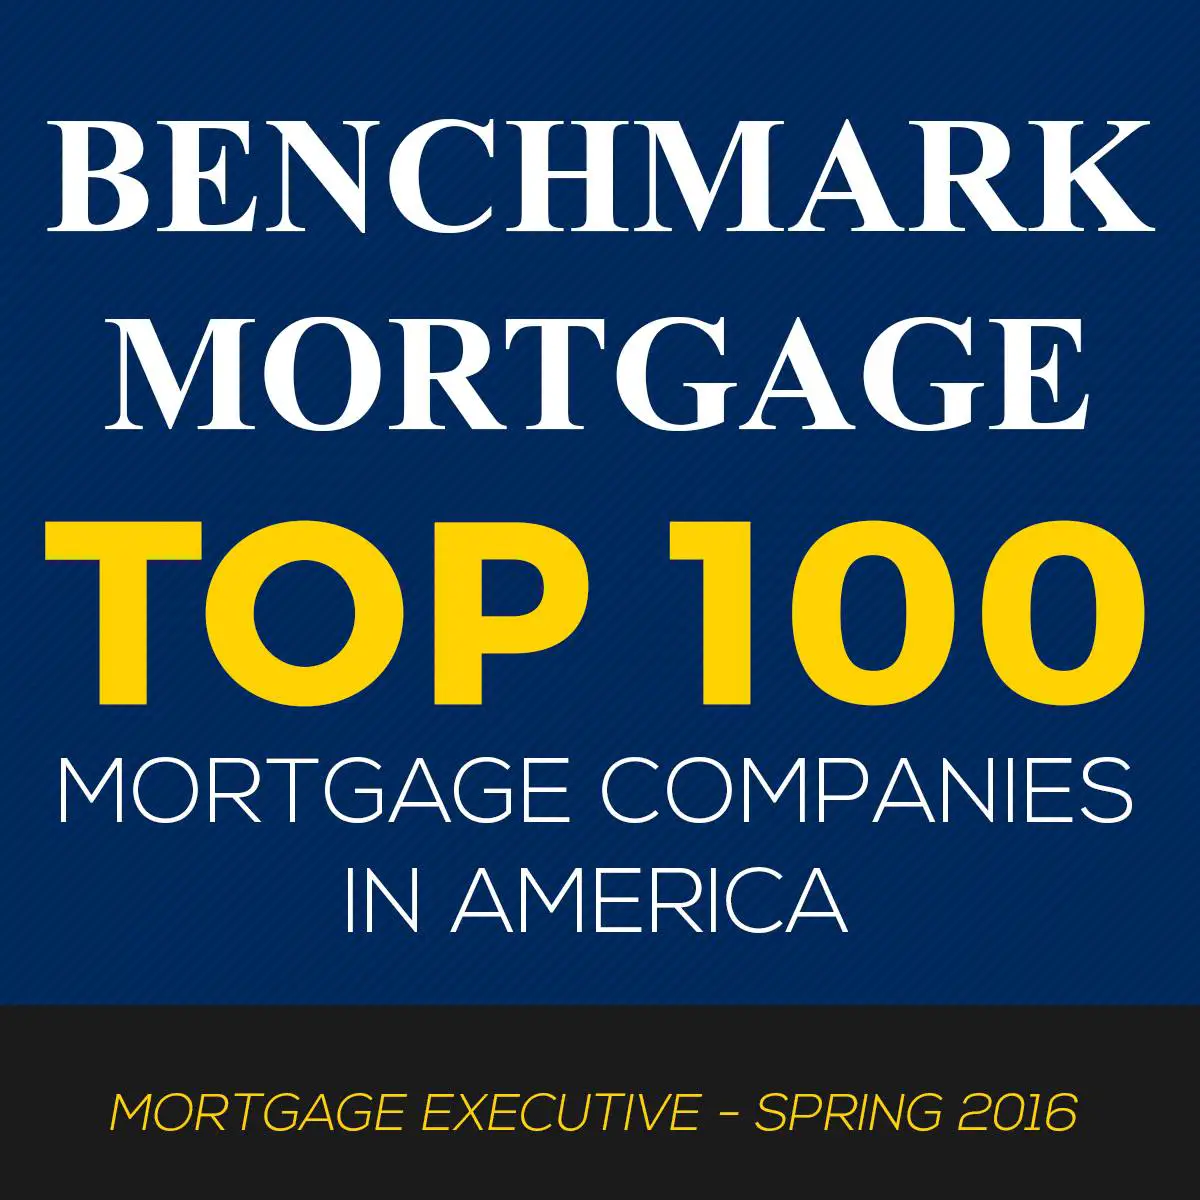 We Are A Top Mortgage Company In America!